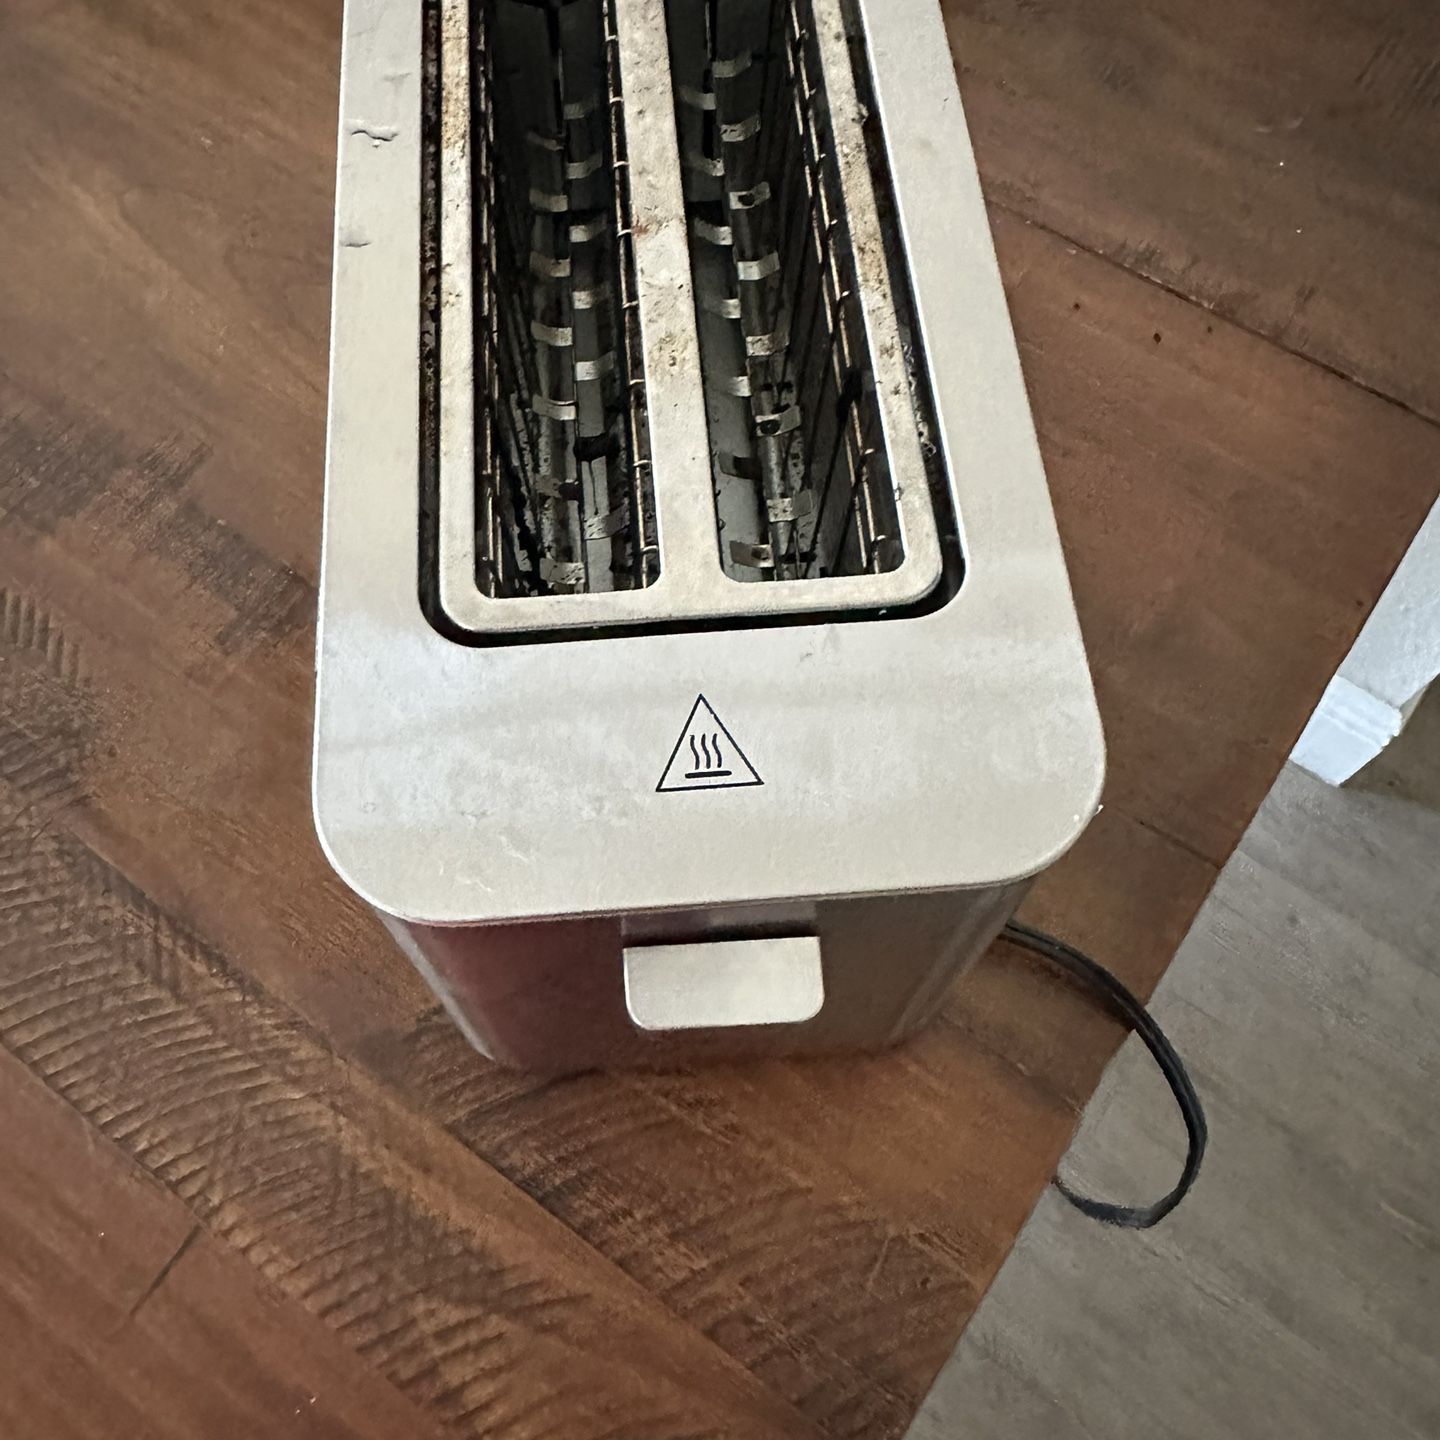  Mueller UltraToast Full Stainless Steel Toaster 4